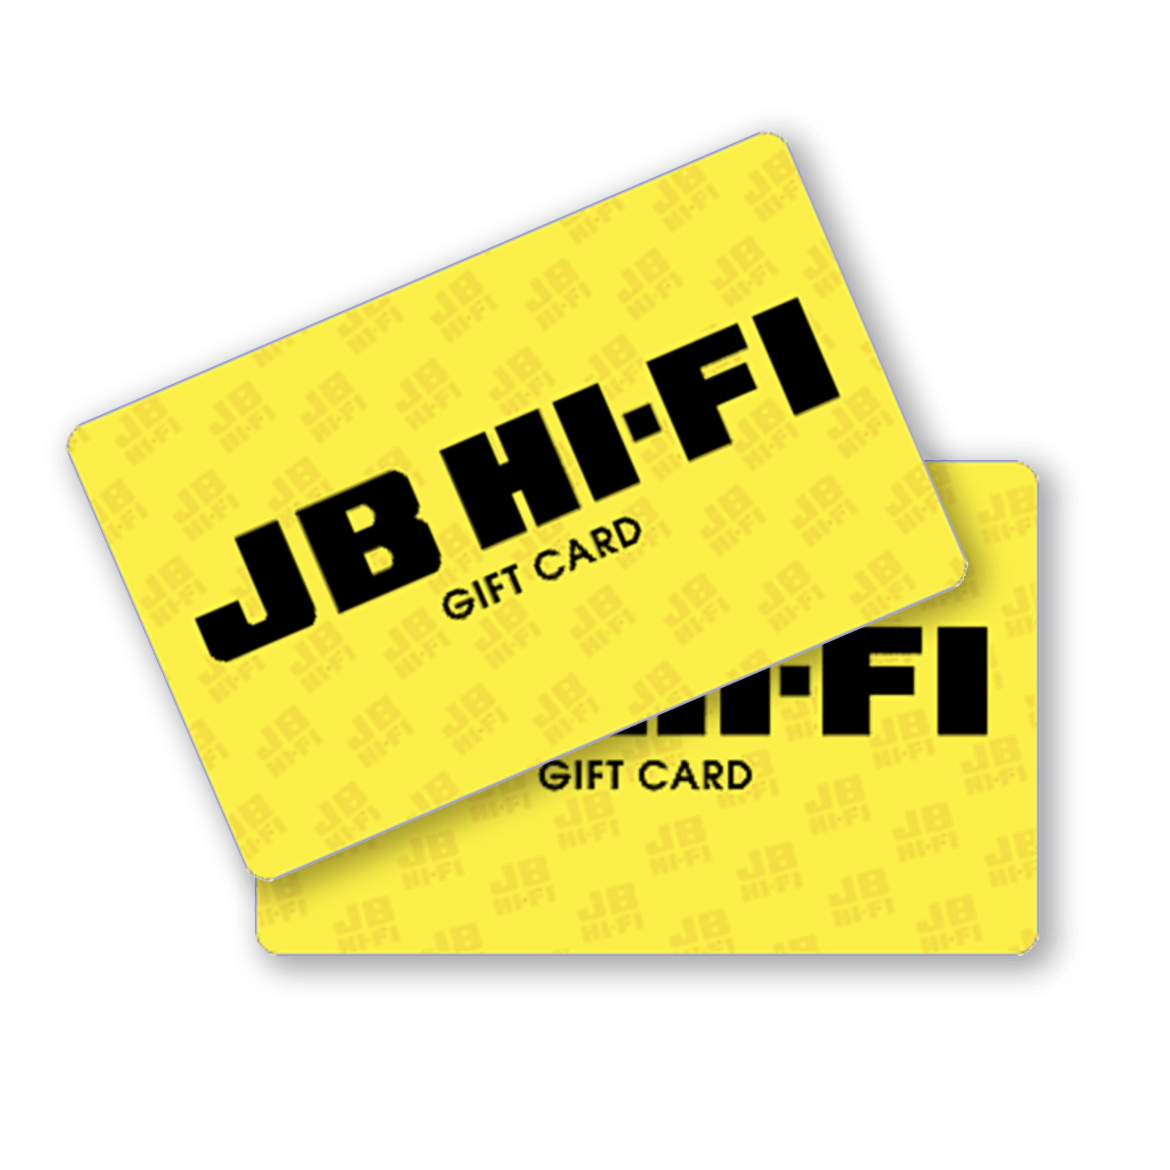 JB-HIFI GIFT CARD